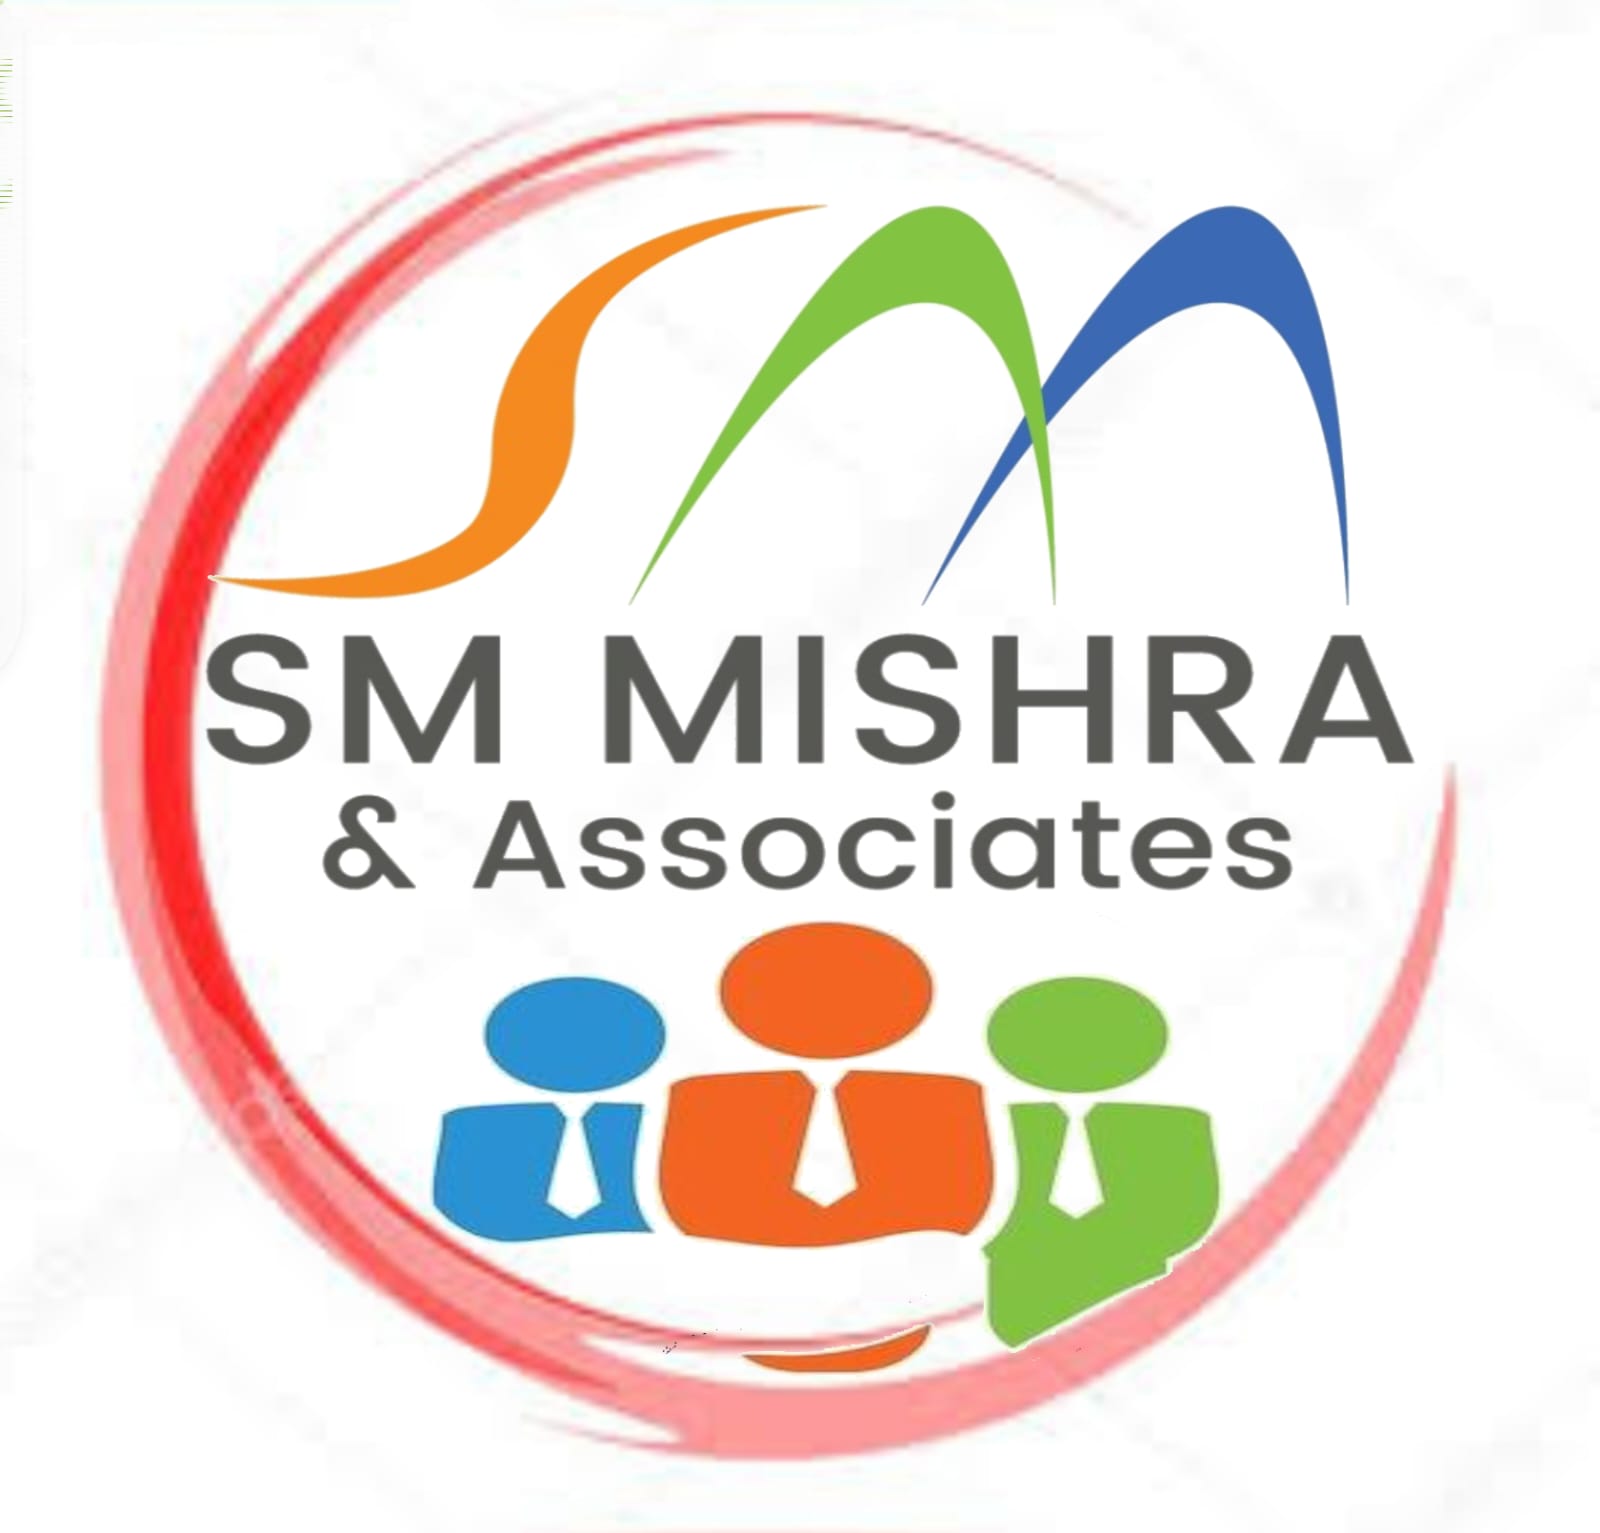 S M Mishra & Associates